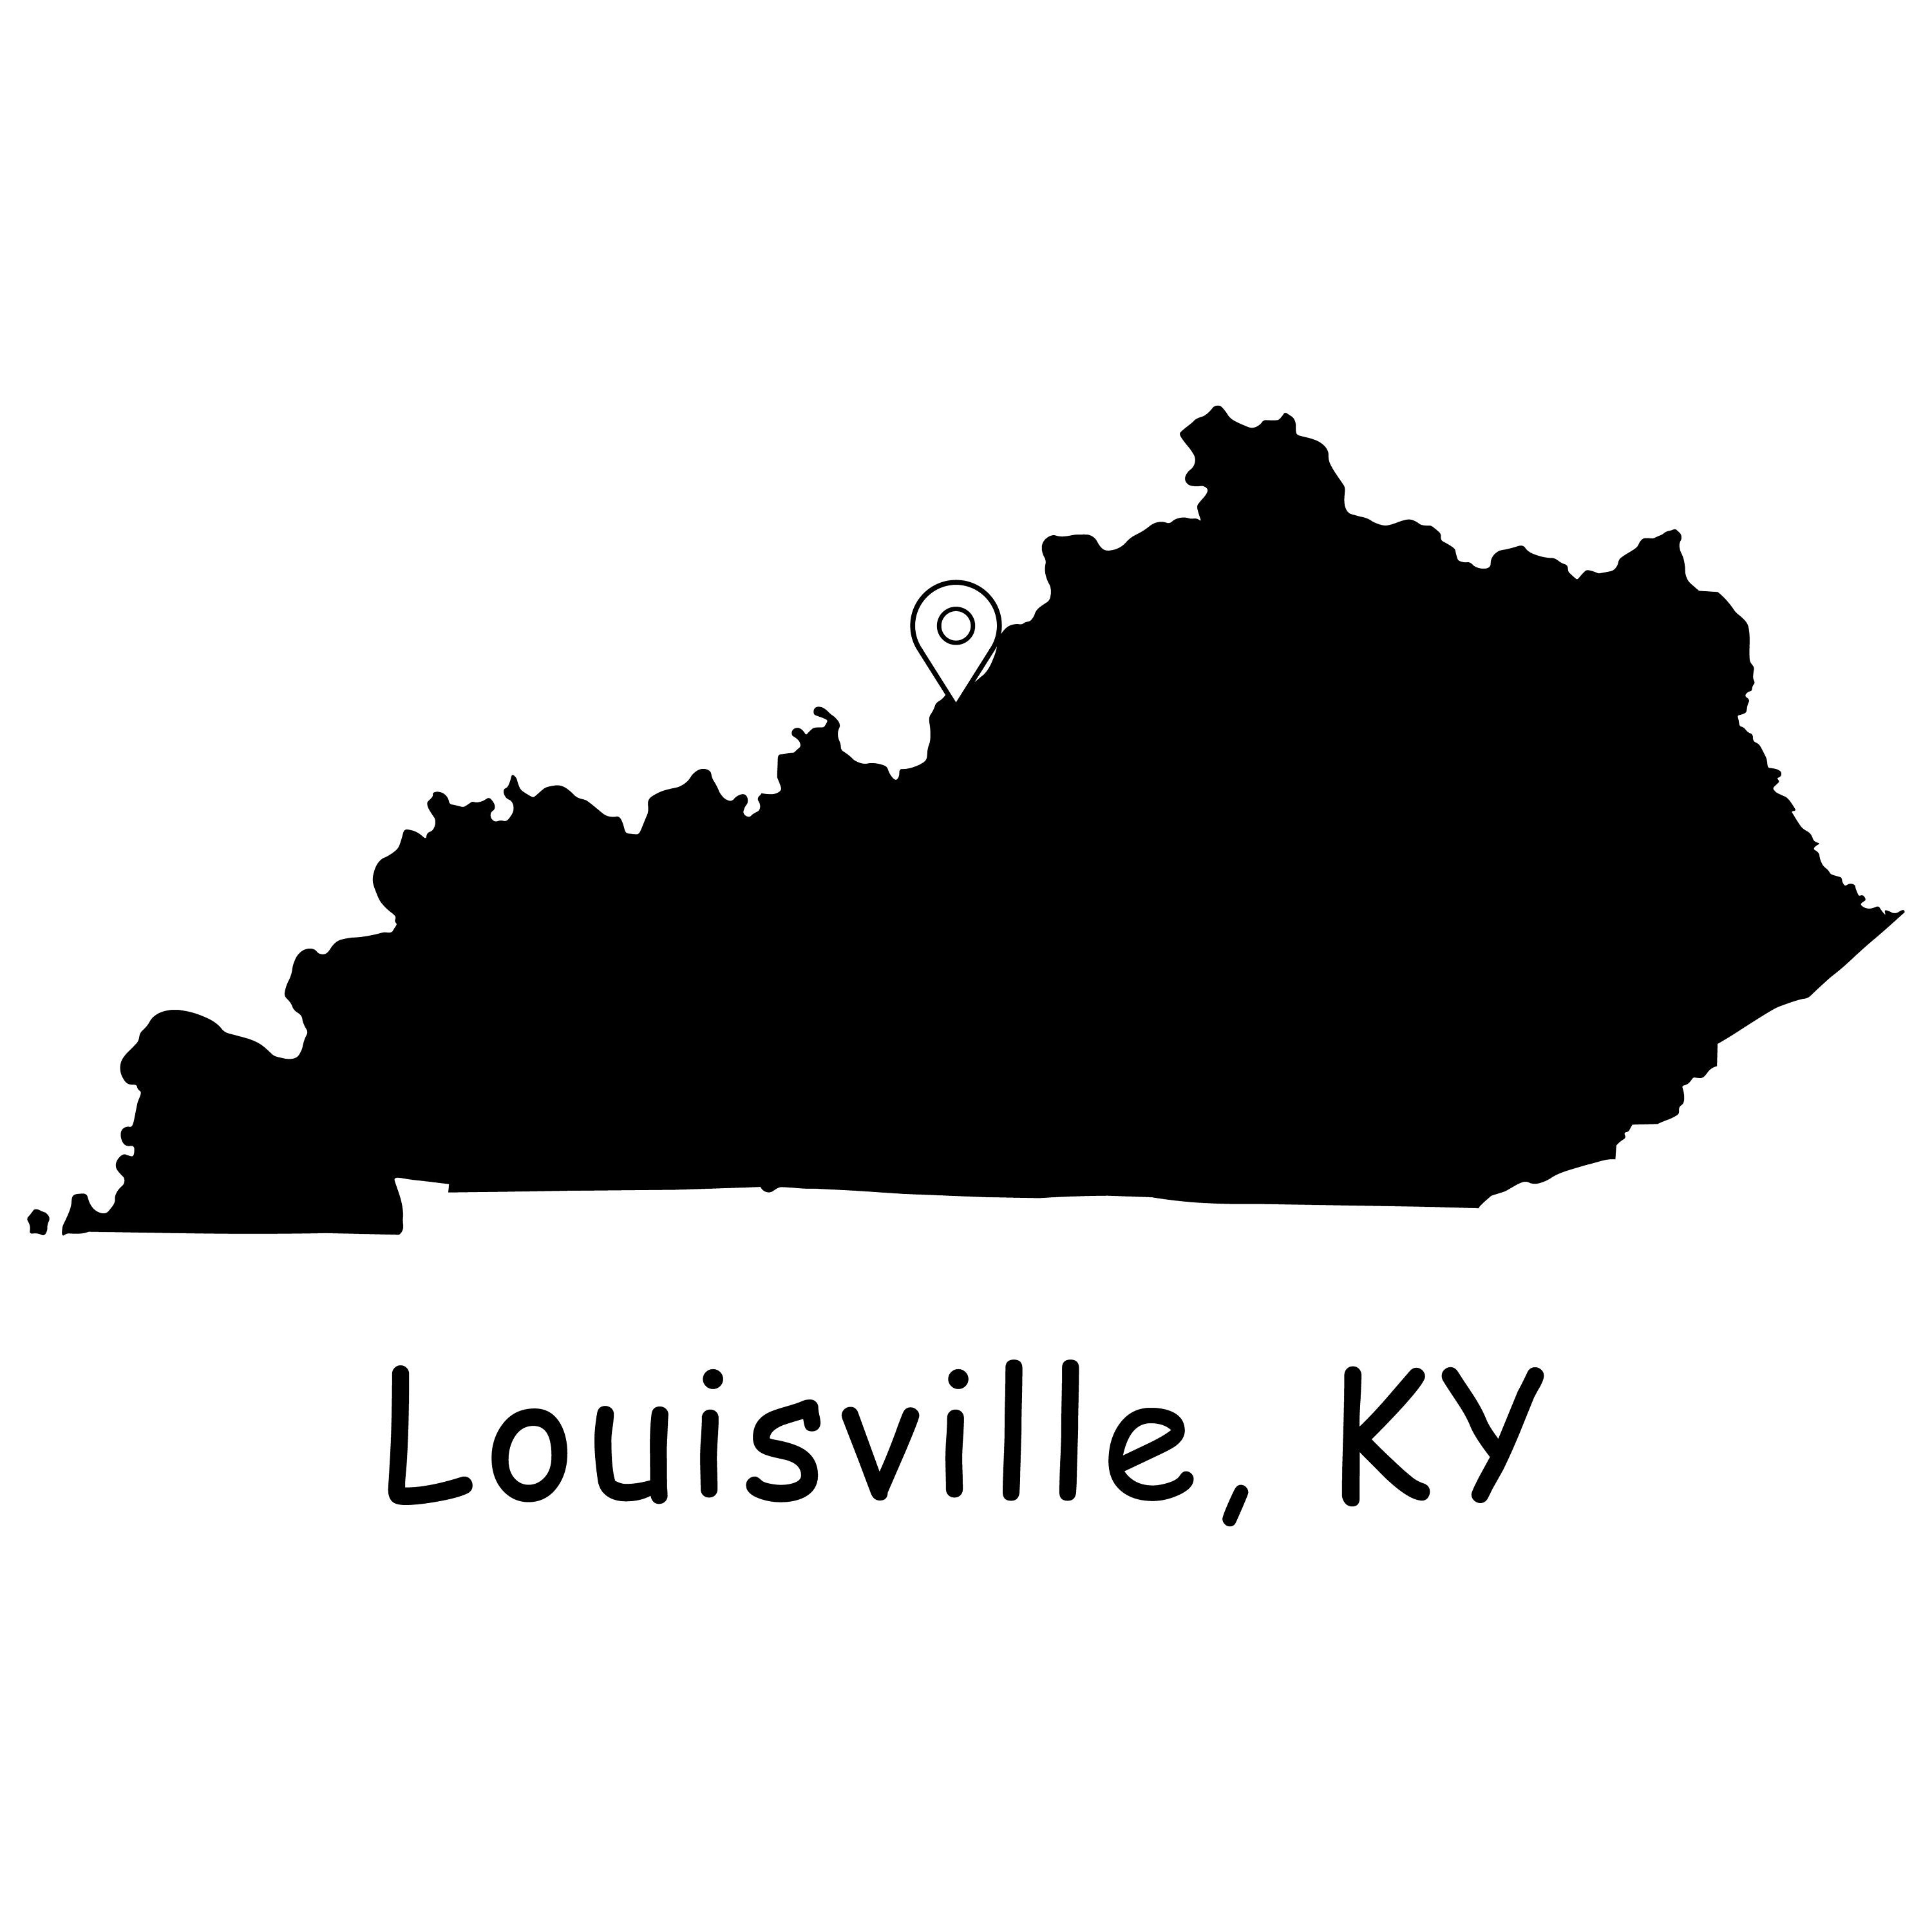 Louisville Kentucky Map Charm Bracelet State of KY Bangle Cuff 